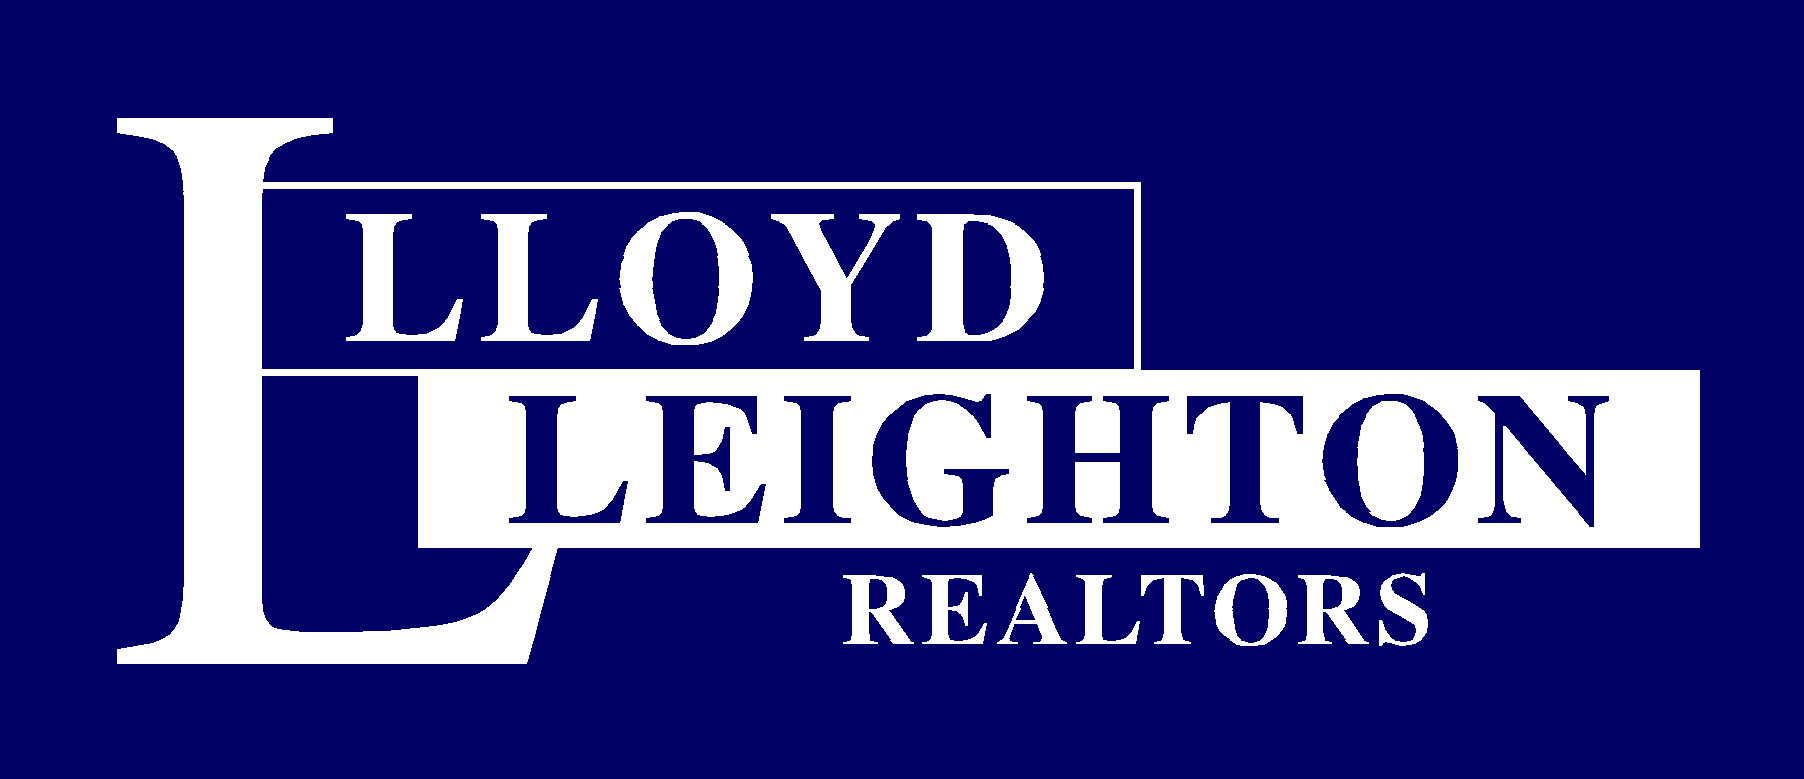 Lloyd Leighton Realtors